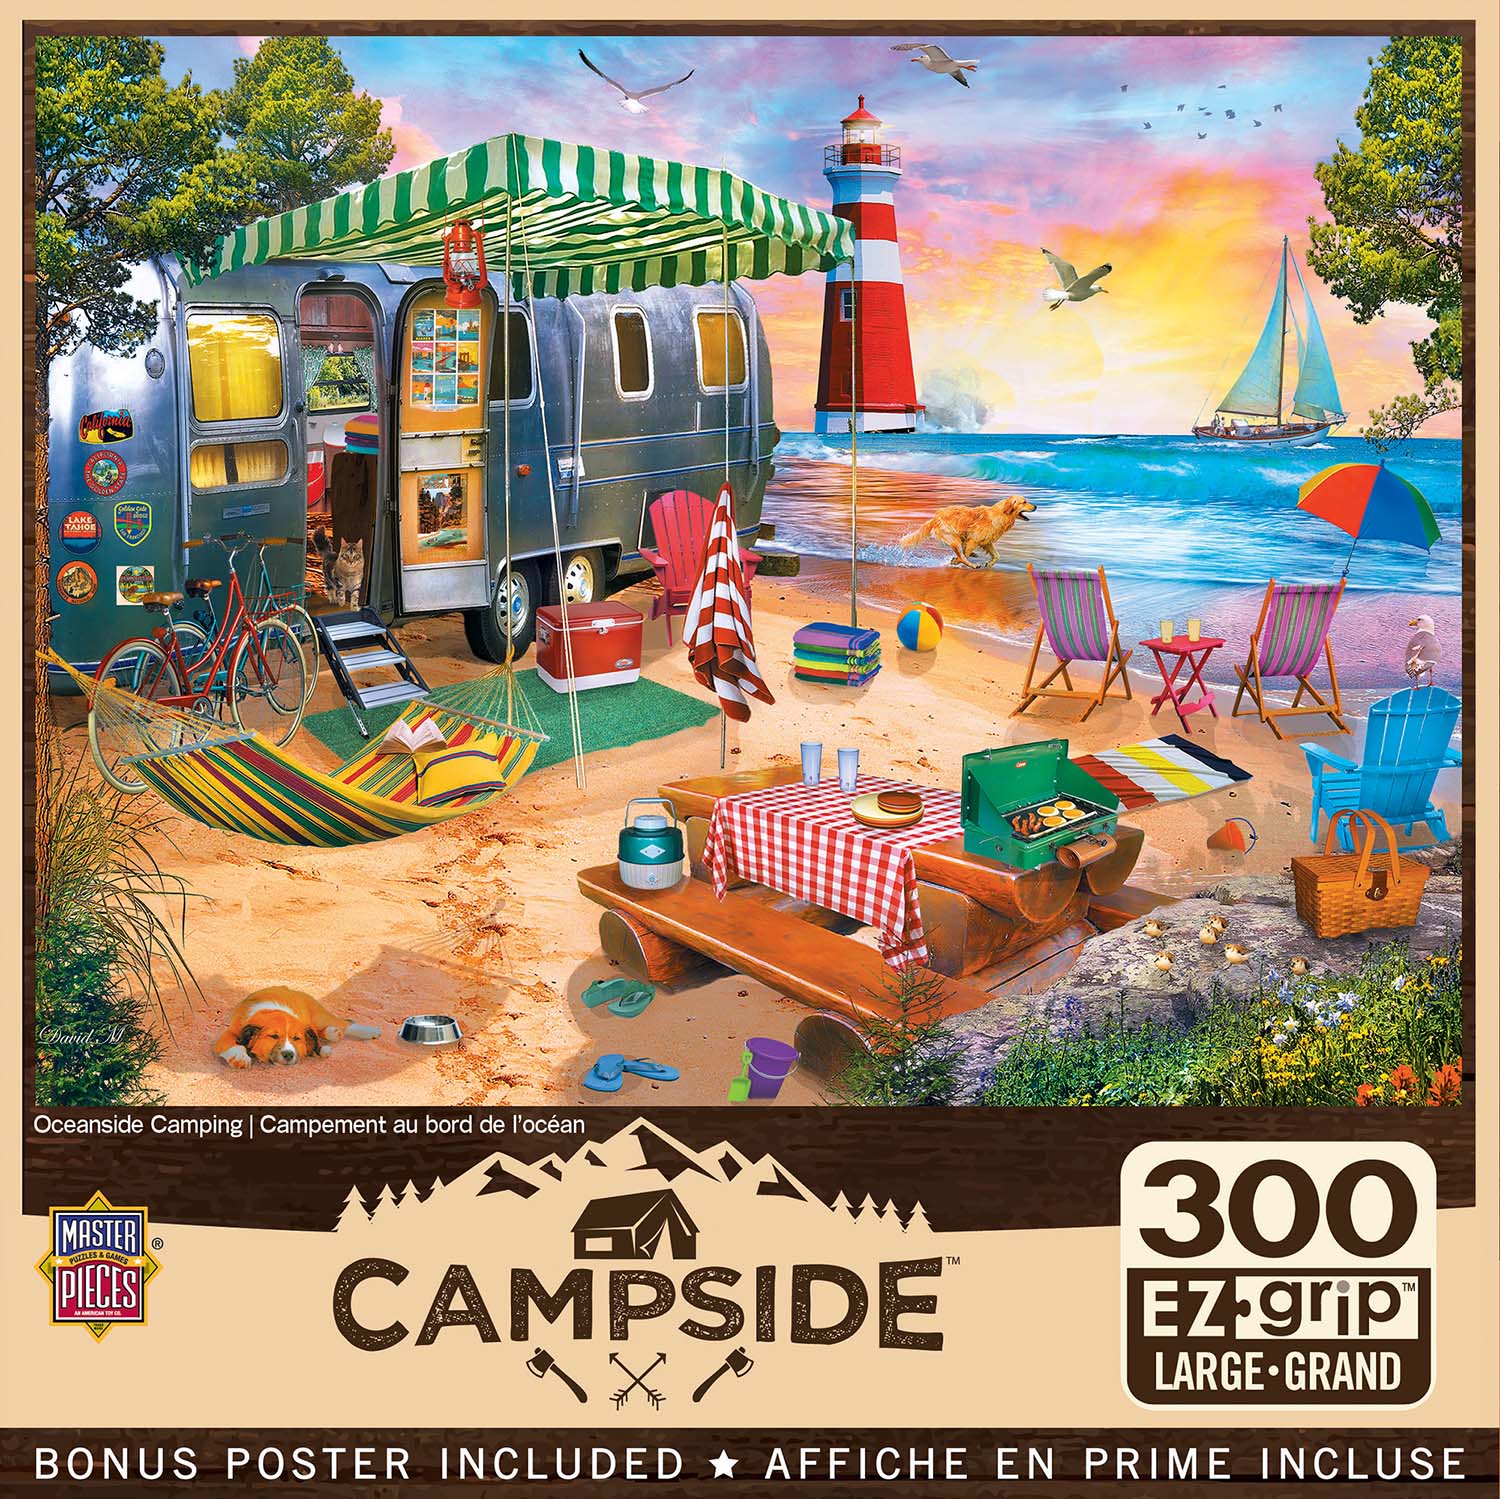 Campside - Oceanside Camping